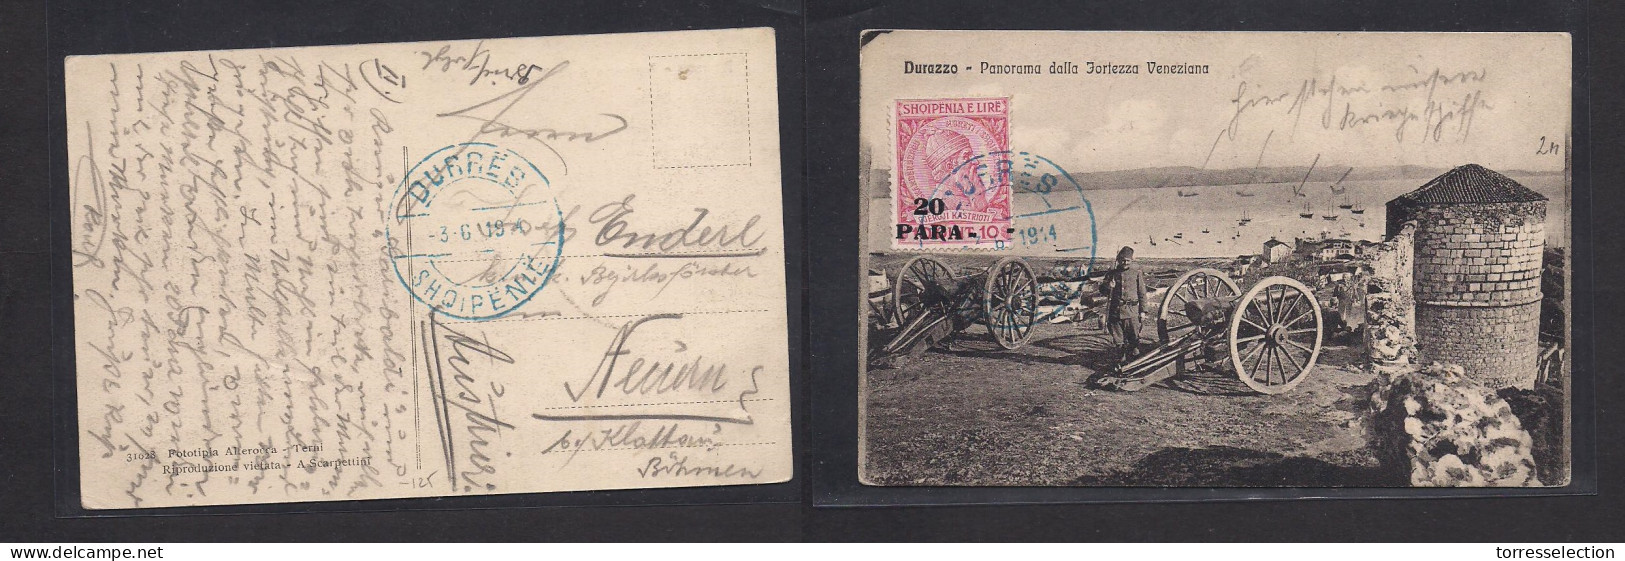 ALBANIA. 1914 (3 June) Durres - Neueen, Austria, Bohemia. Rare Fkd Photo Card Camons, Venezia Castle. Rarity Comercial M - Albania